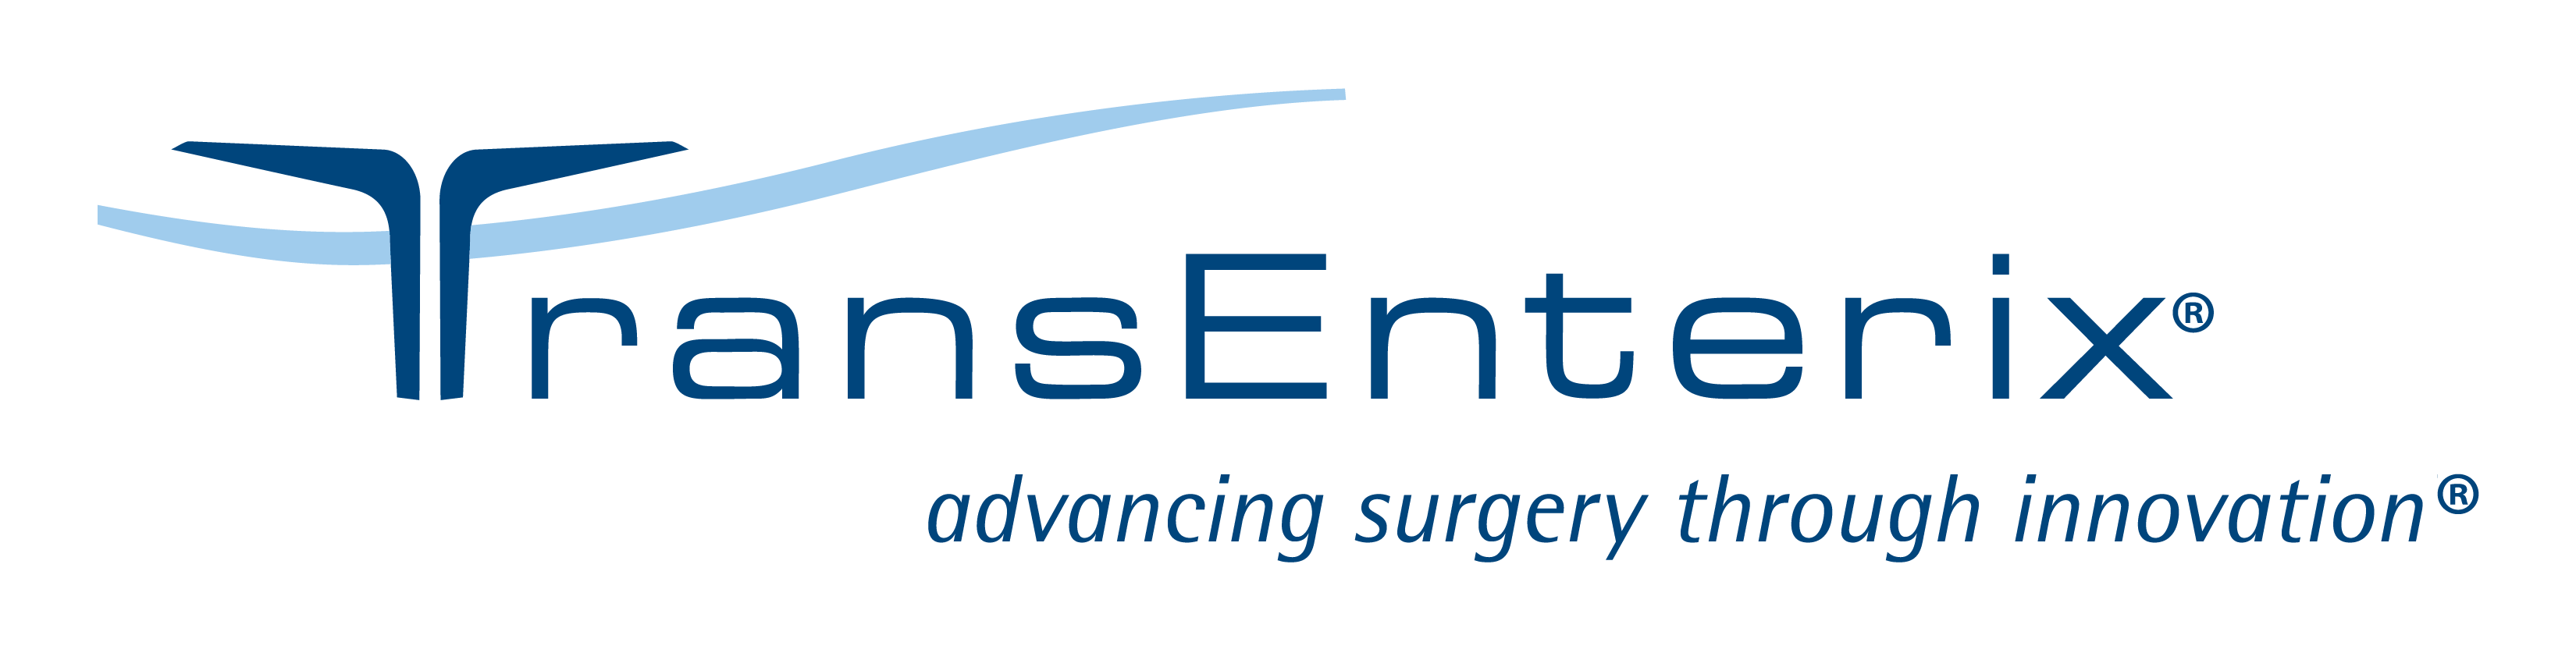 TransEnterix logo